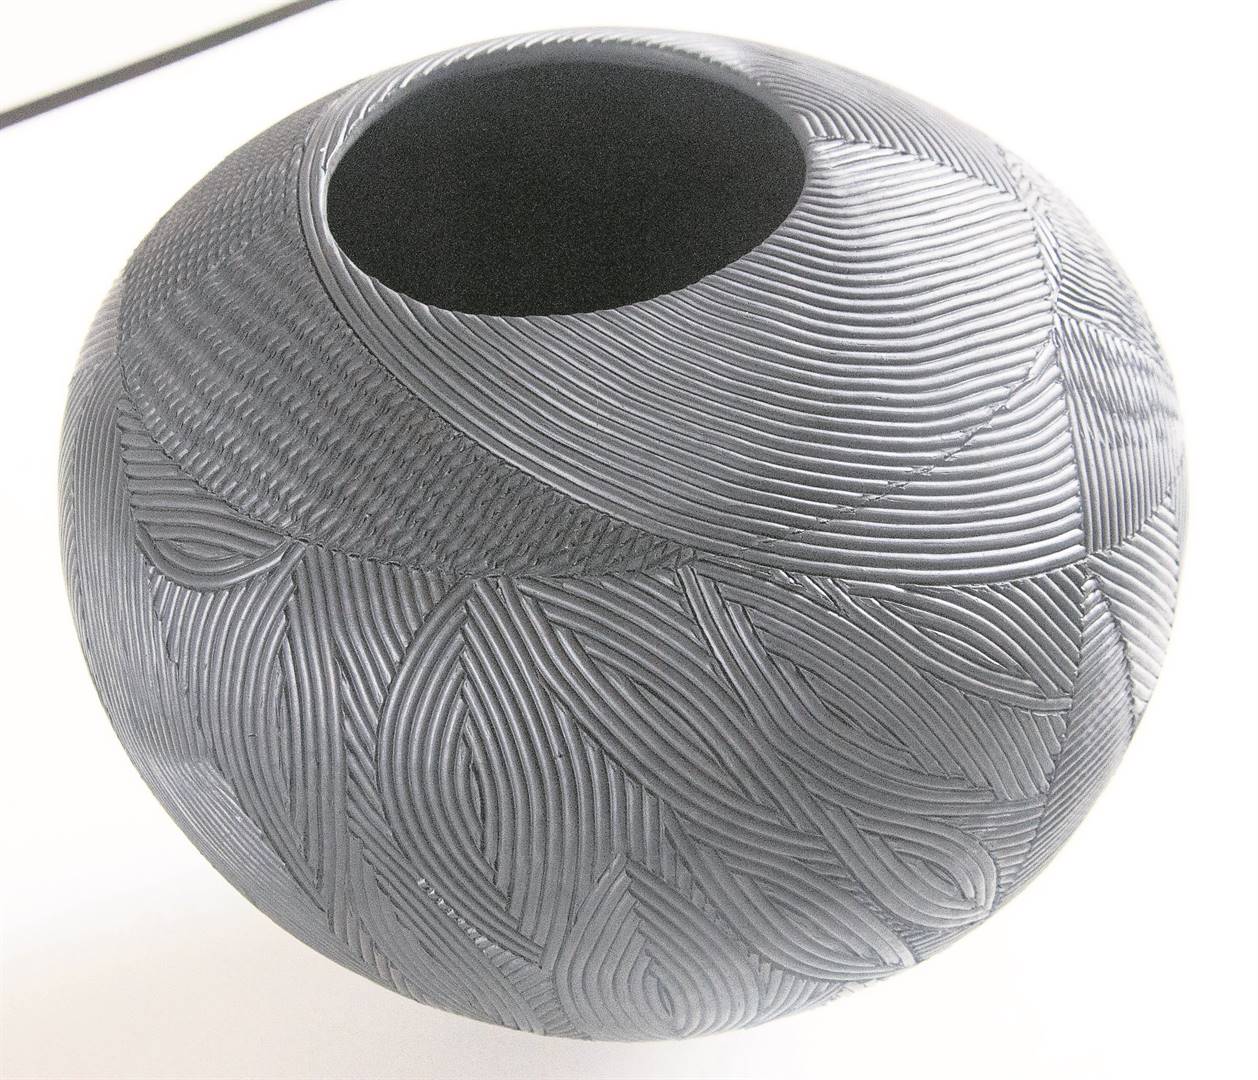 One of ceramic artist Sbonelo Luthuli’s pots.